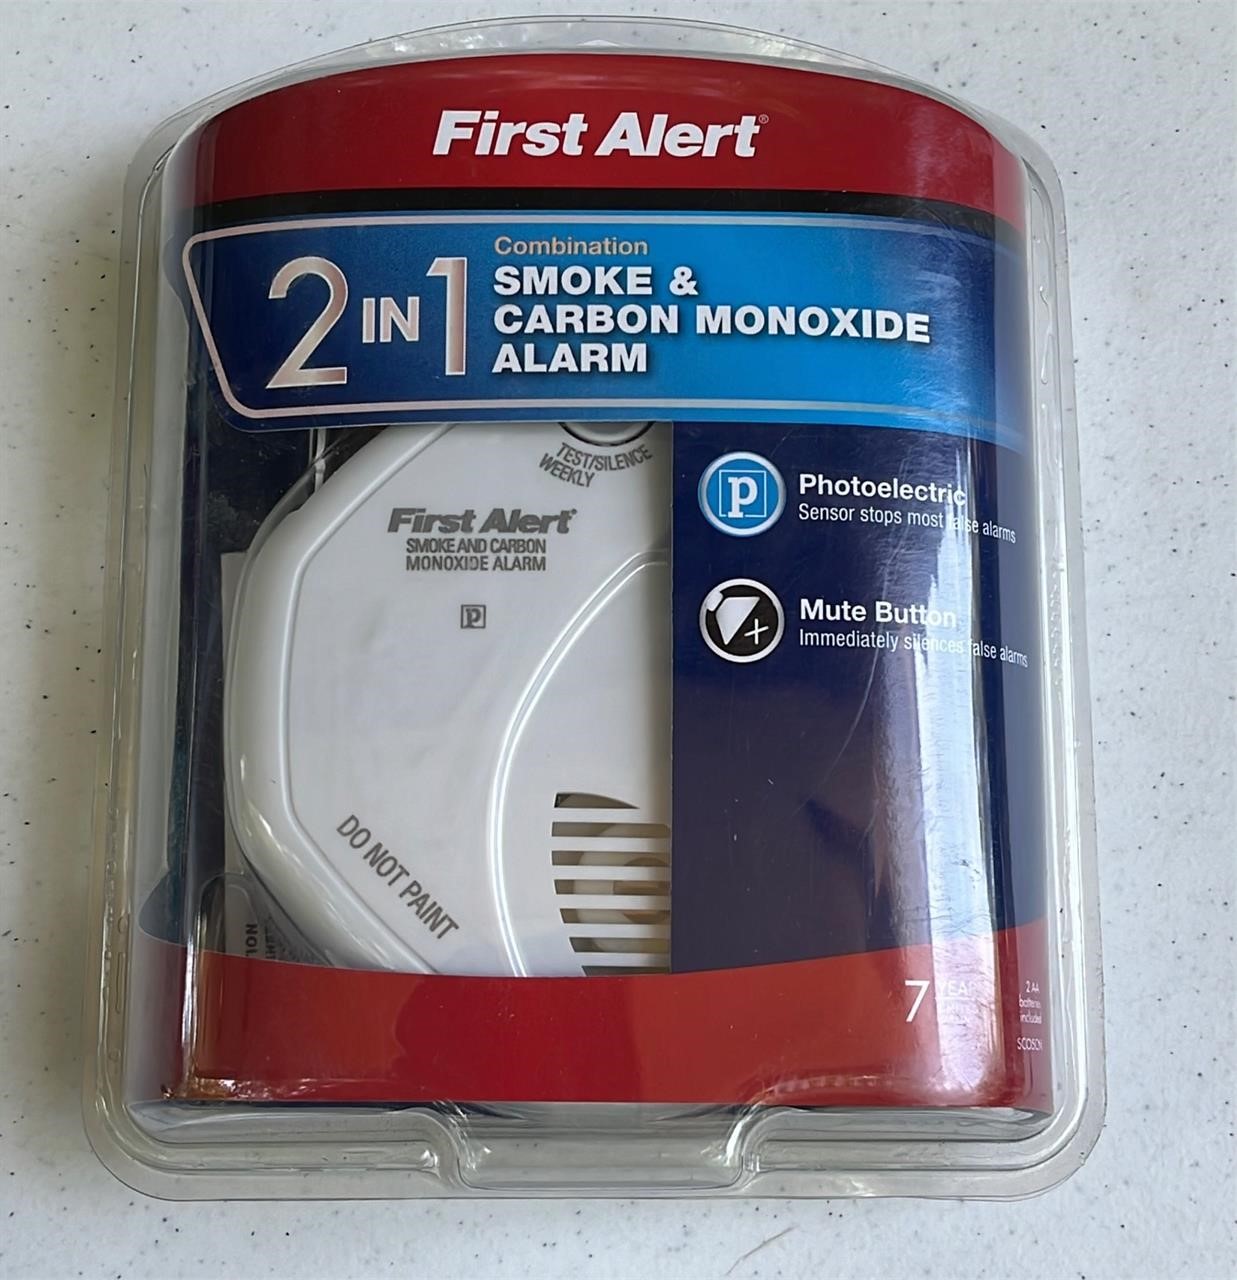 First Alert 2 in 1 Smoke/Carbon Monoxide Alarm